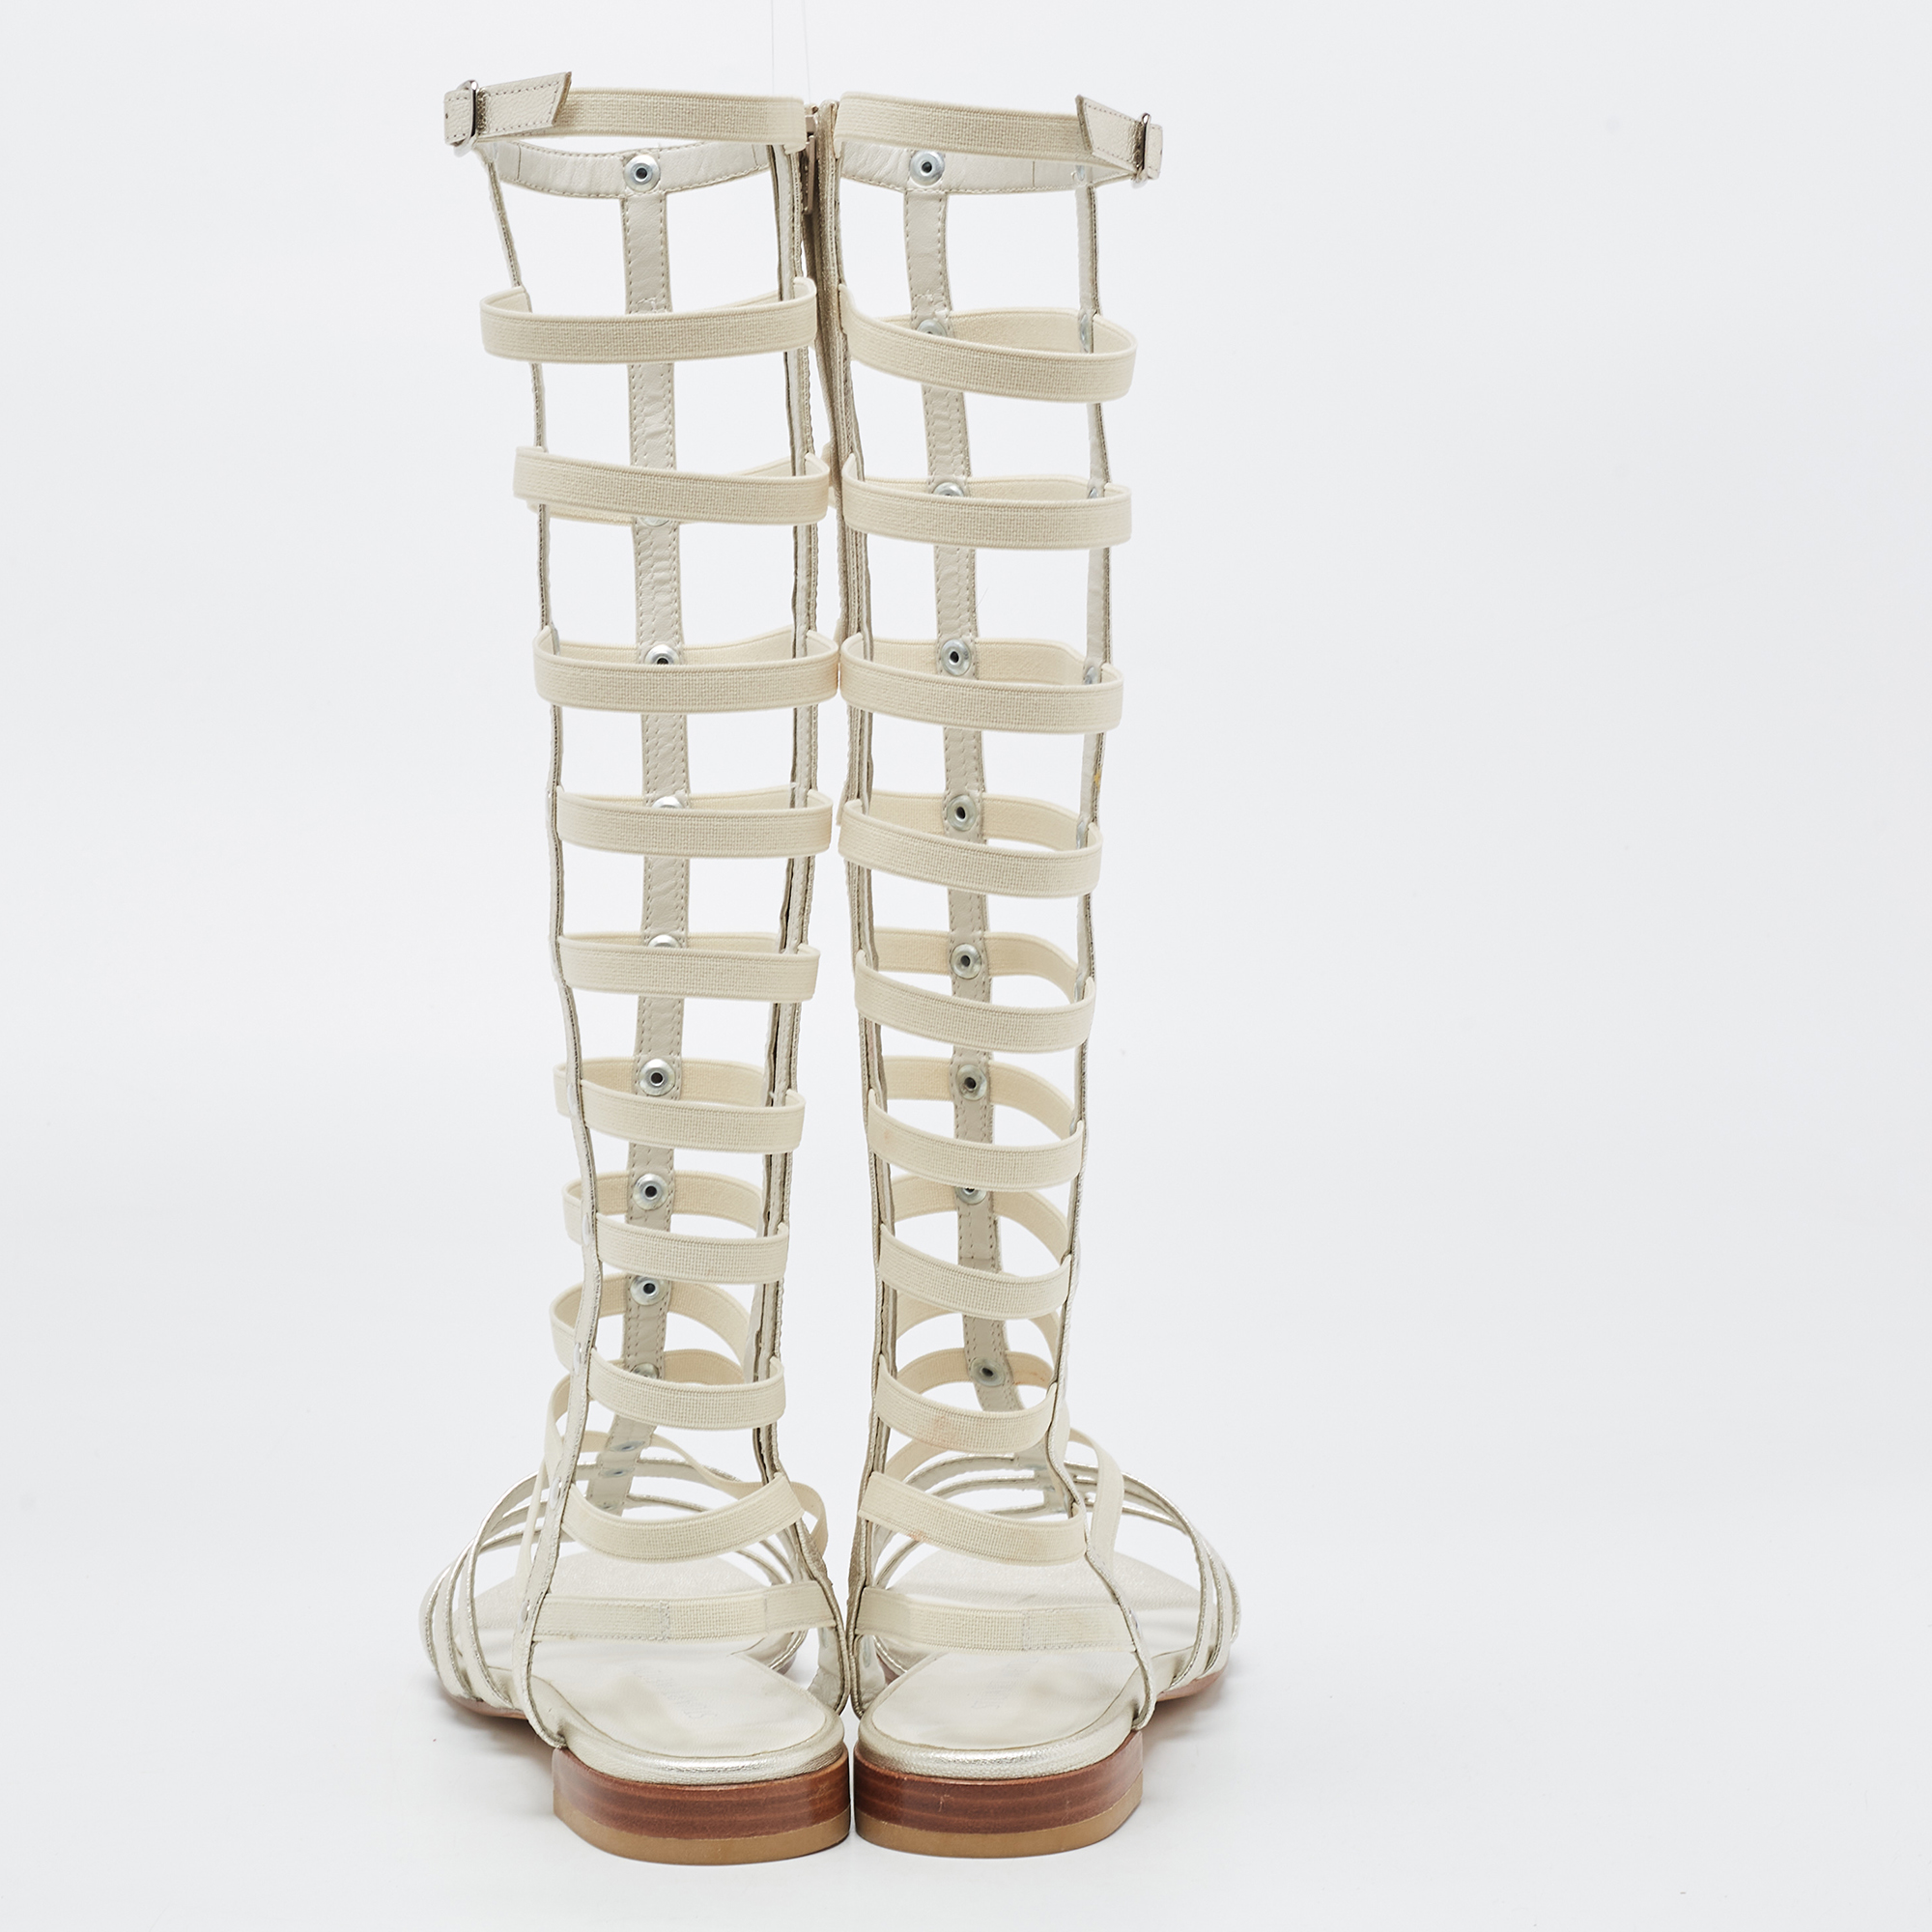 Stuart Weitzman Silver Leather And Elastic Gladiator Flat Sandals Size 36